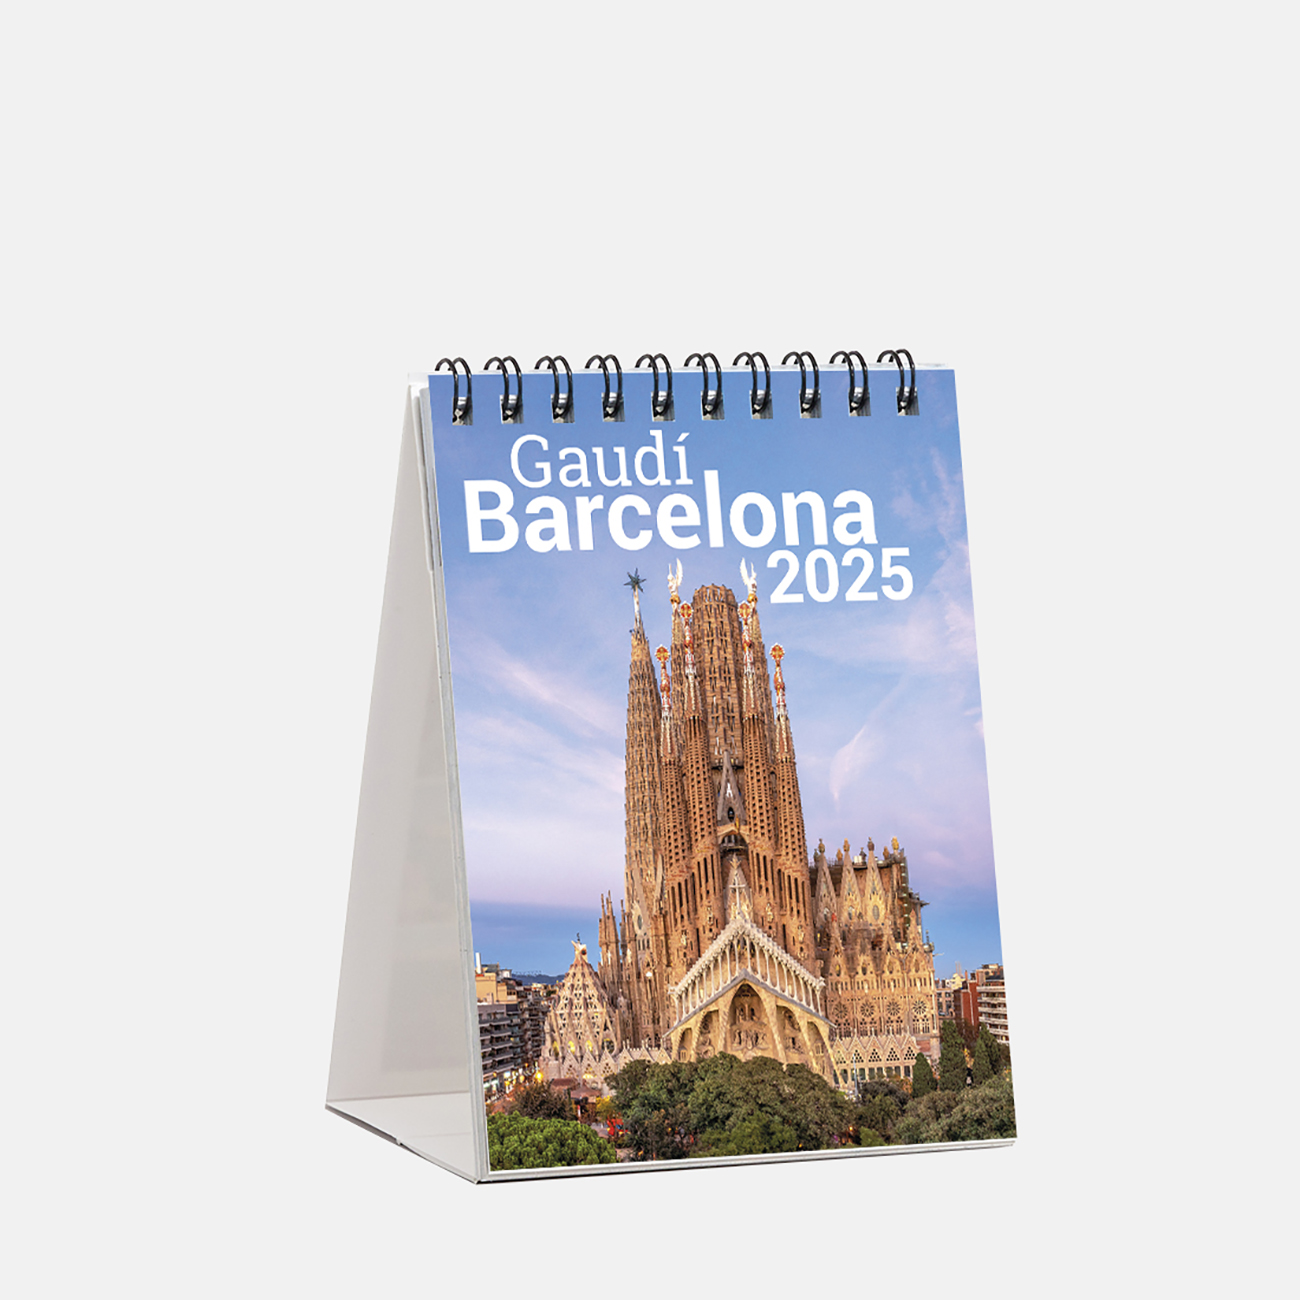 Calendar 2025 Gaudí sm25g2 calendario mini 2025 gaudi